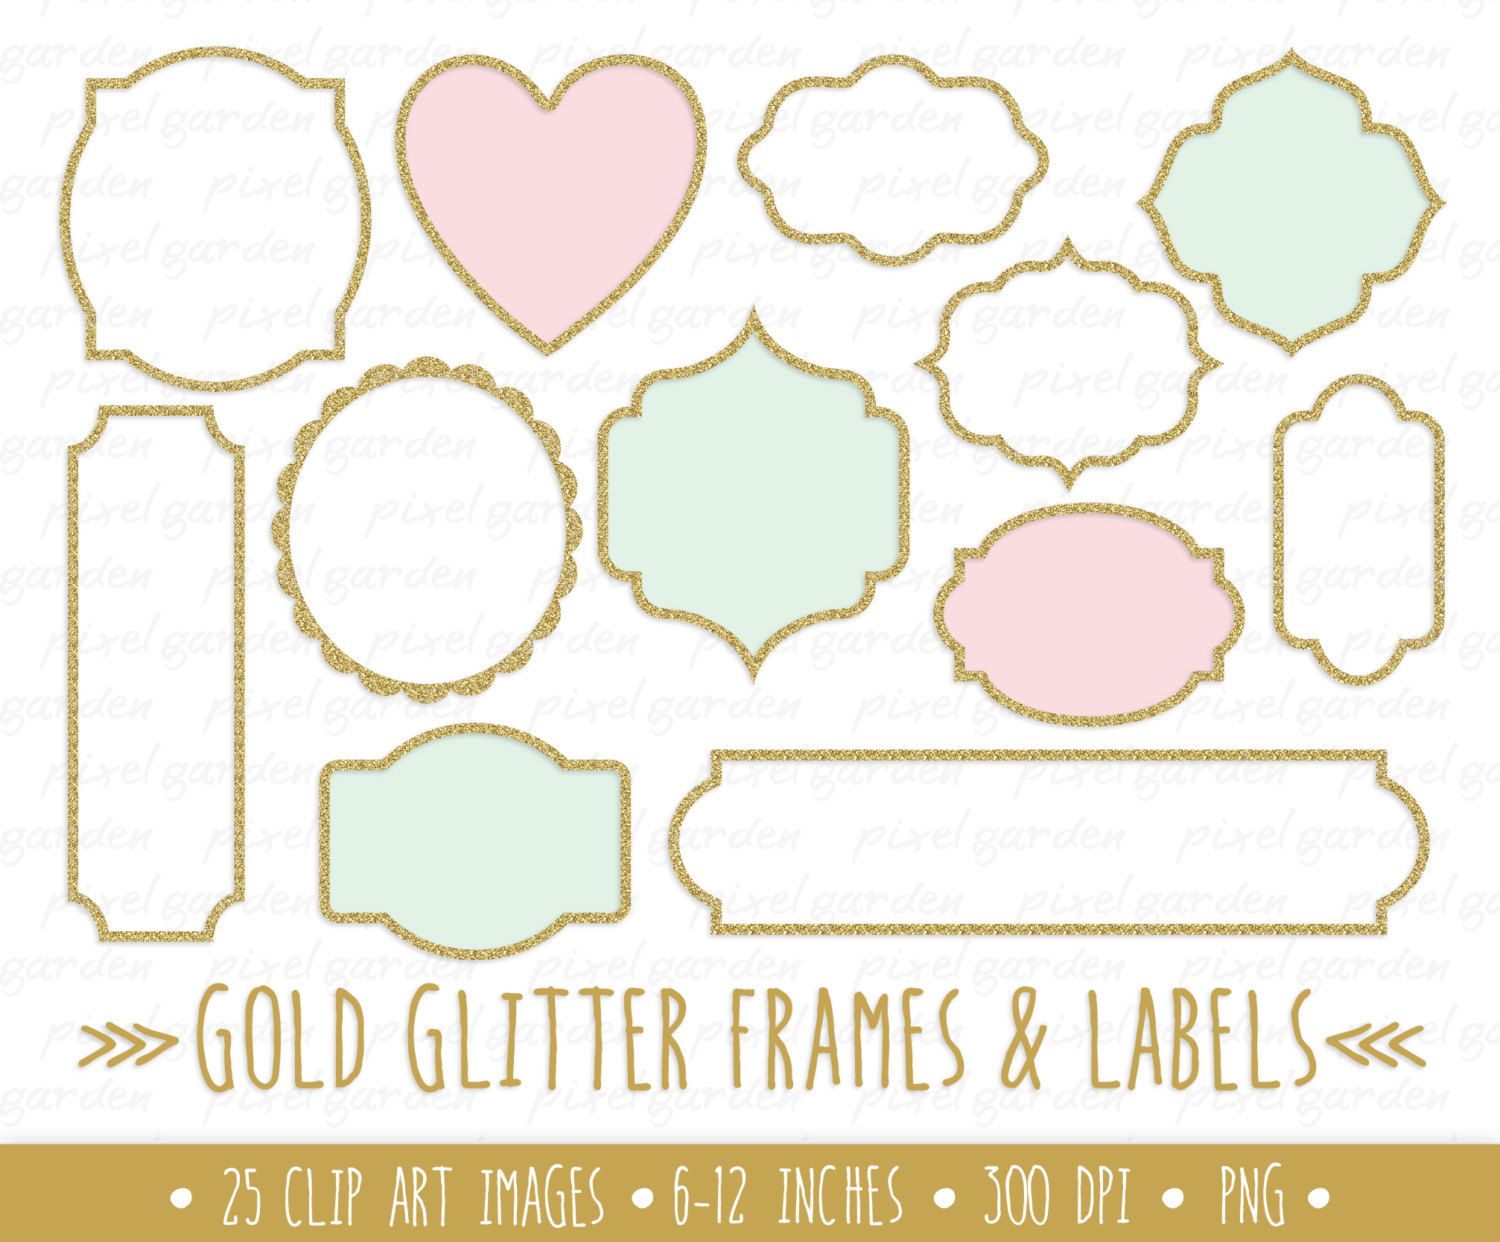 label clipart gold glitter